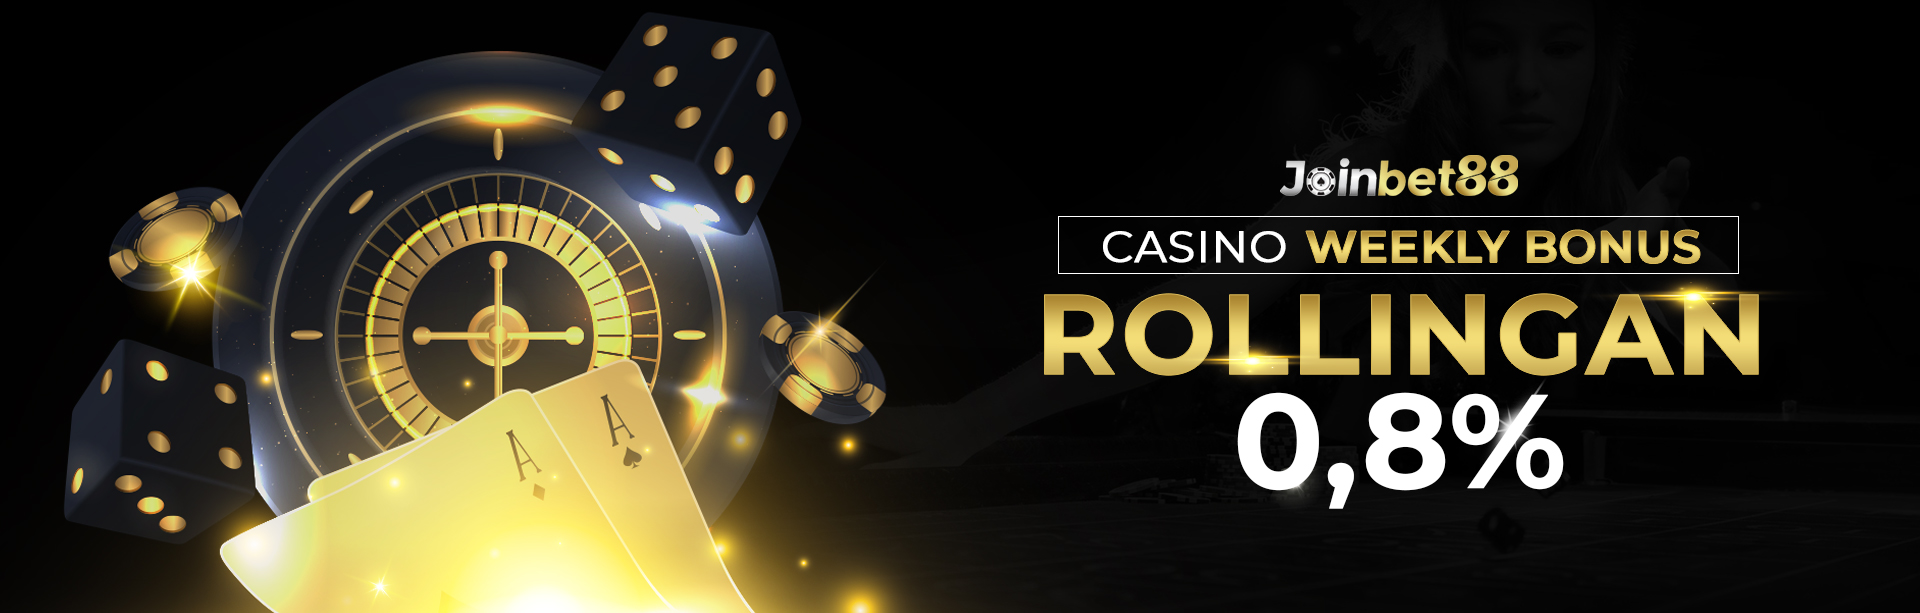 Rollingan Casino 0.8%